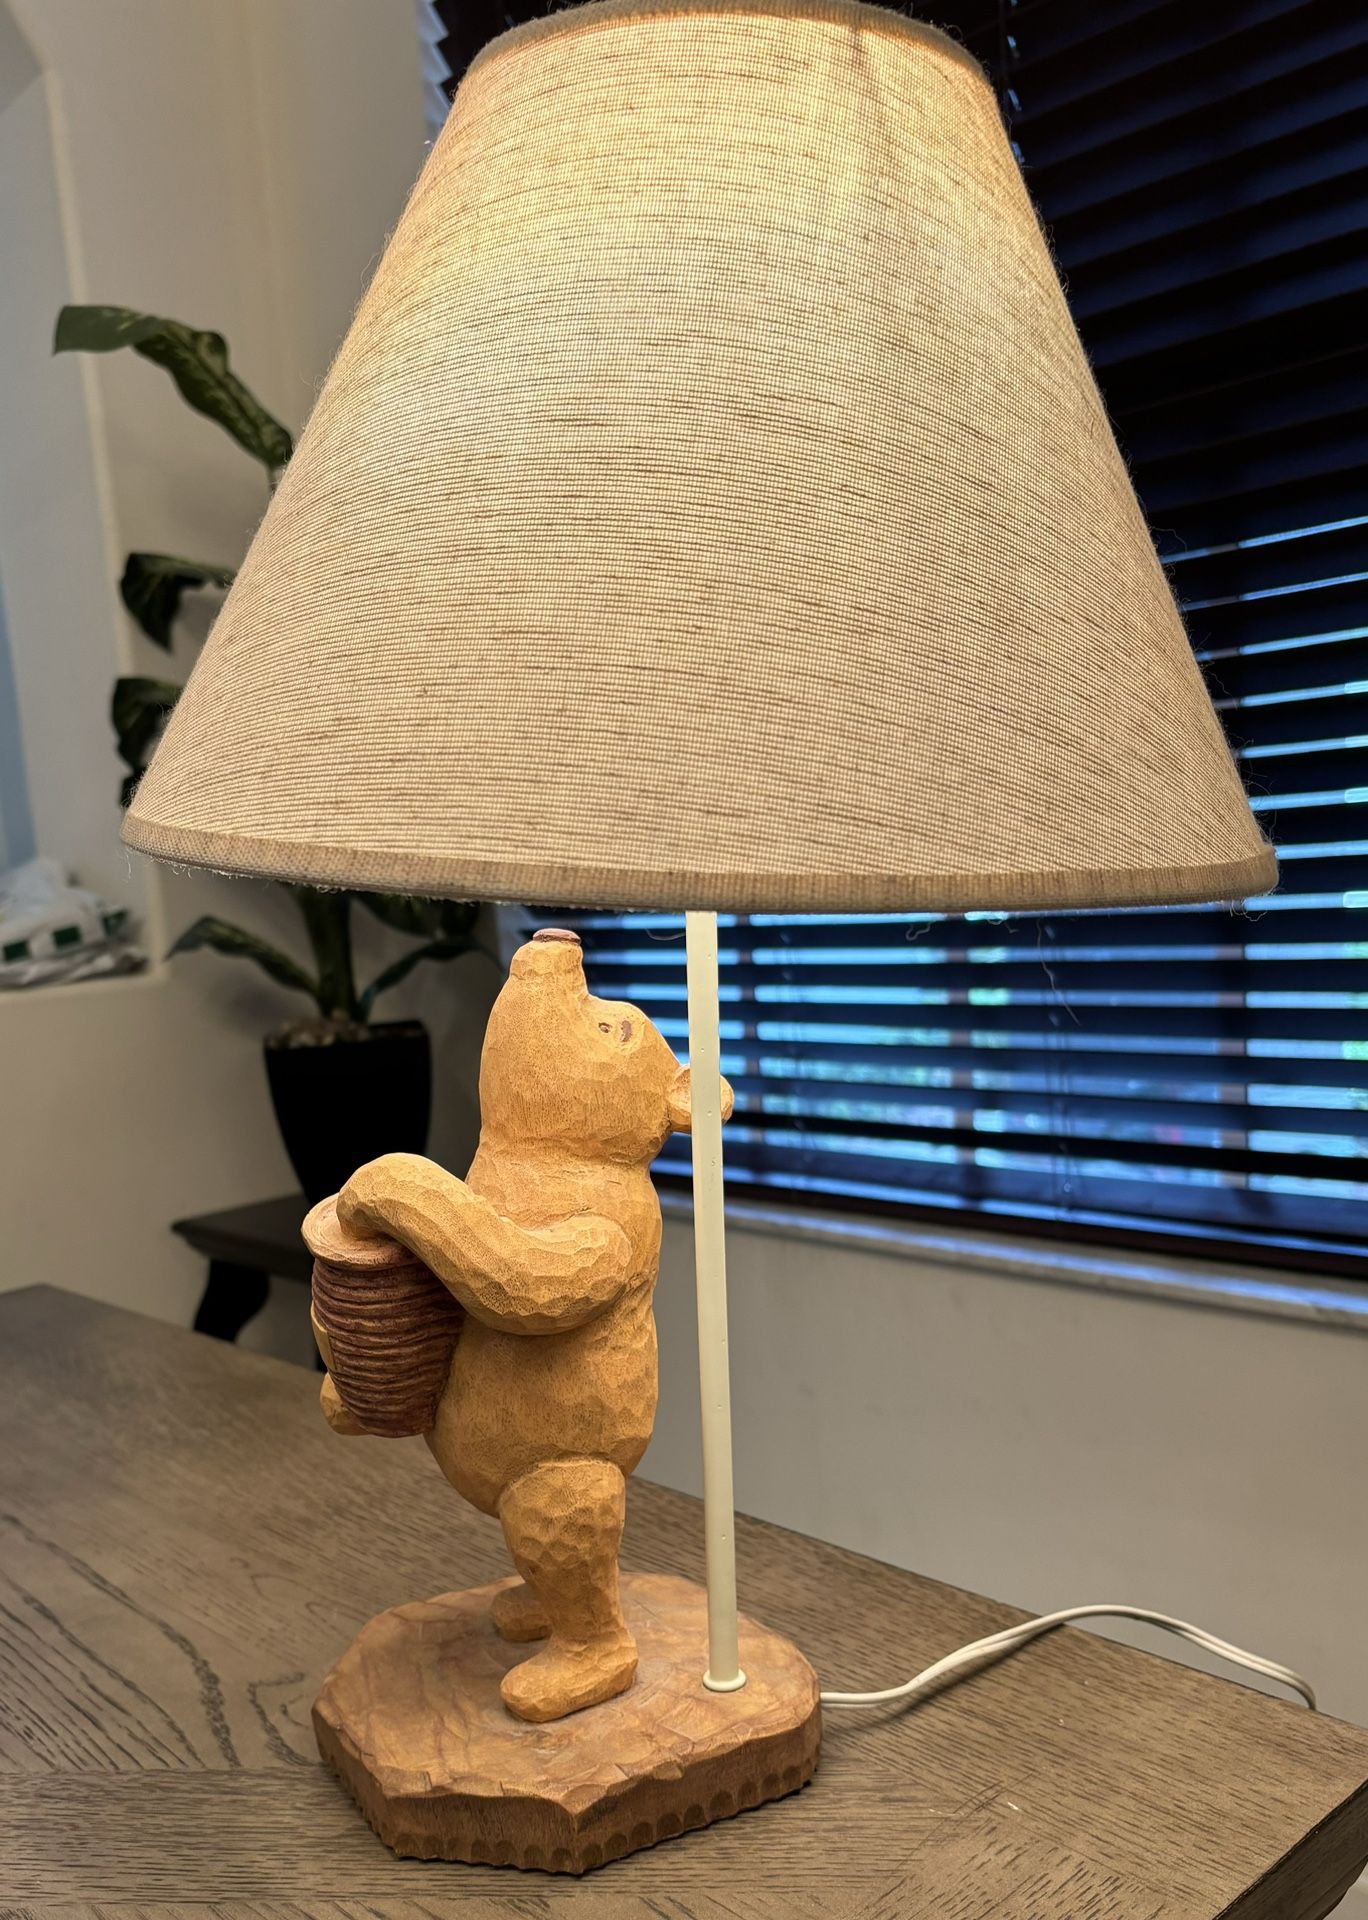 Classic Winnie the Pooh, Disney Nursery Lamp designed by Charpente